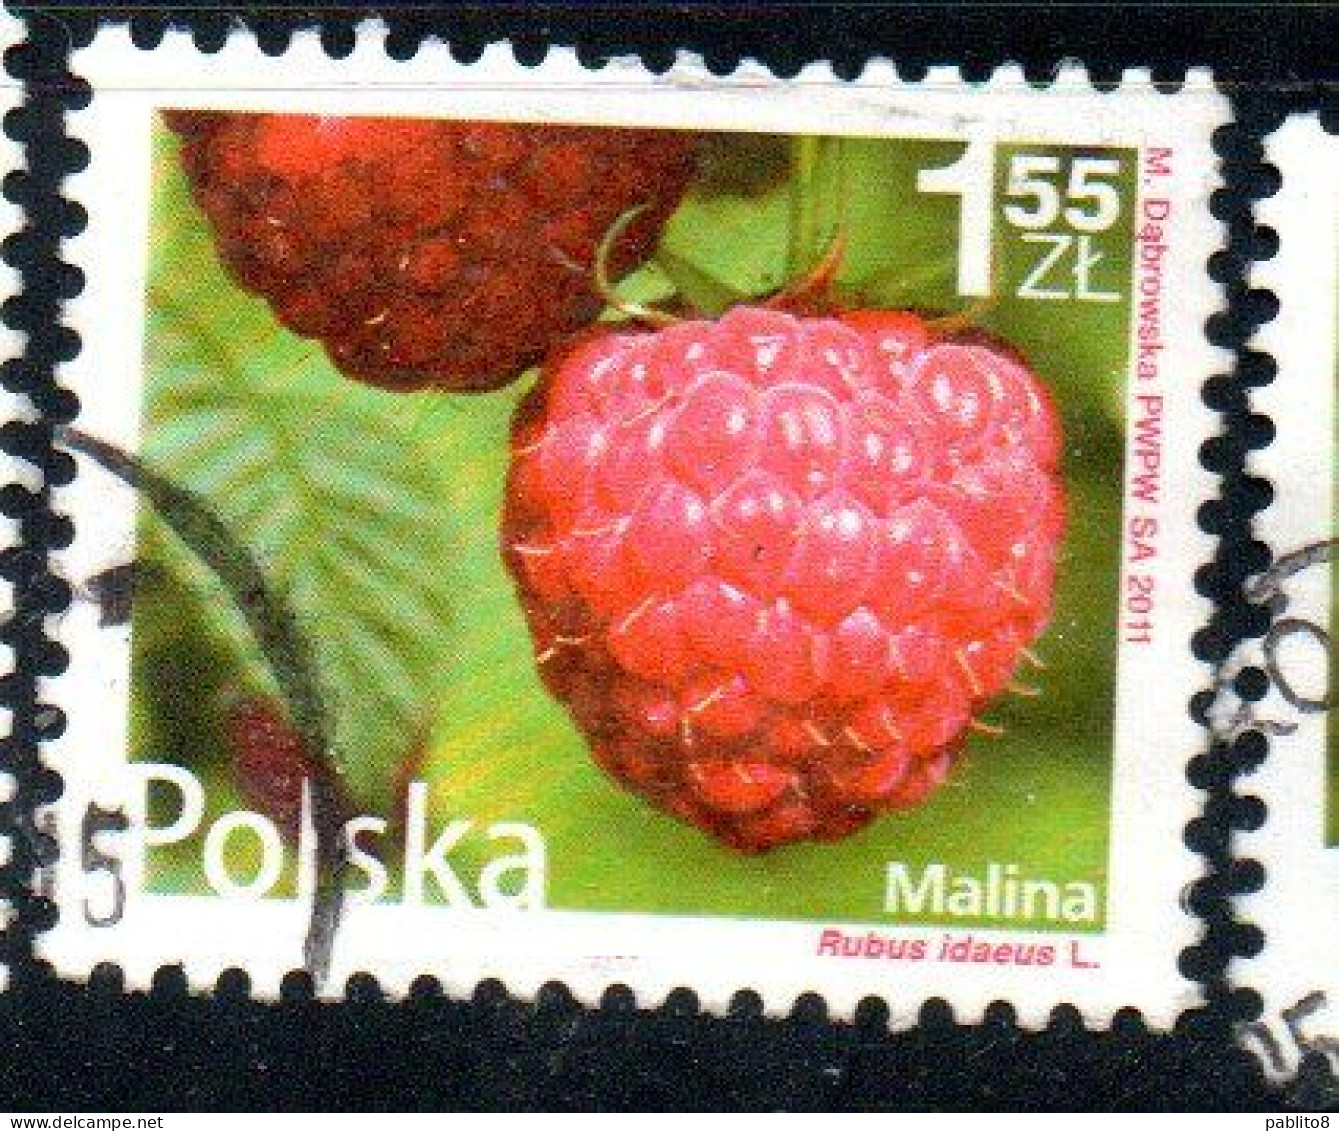 POLONIA POLAND POLSKA 2011 FRUIT AND FLOWERS RUBUS IDAEUS 1.55z USED USATO OBLITERE' - Oblitérés